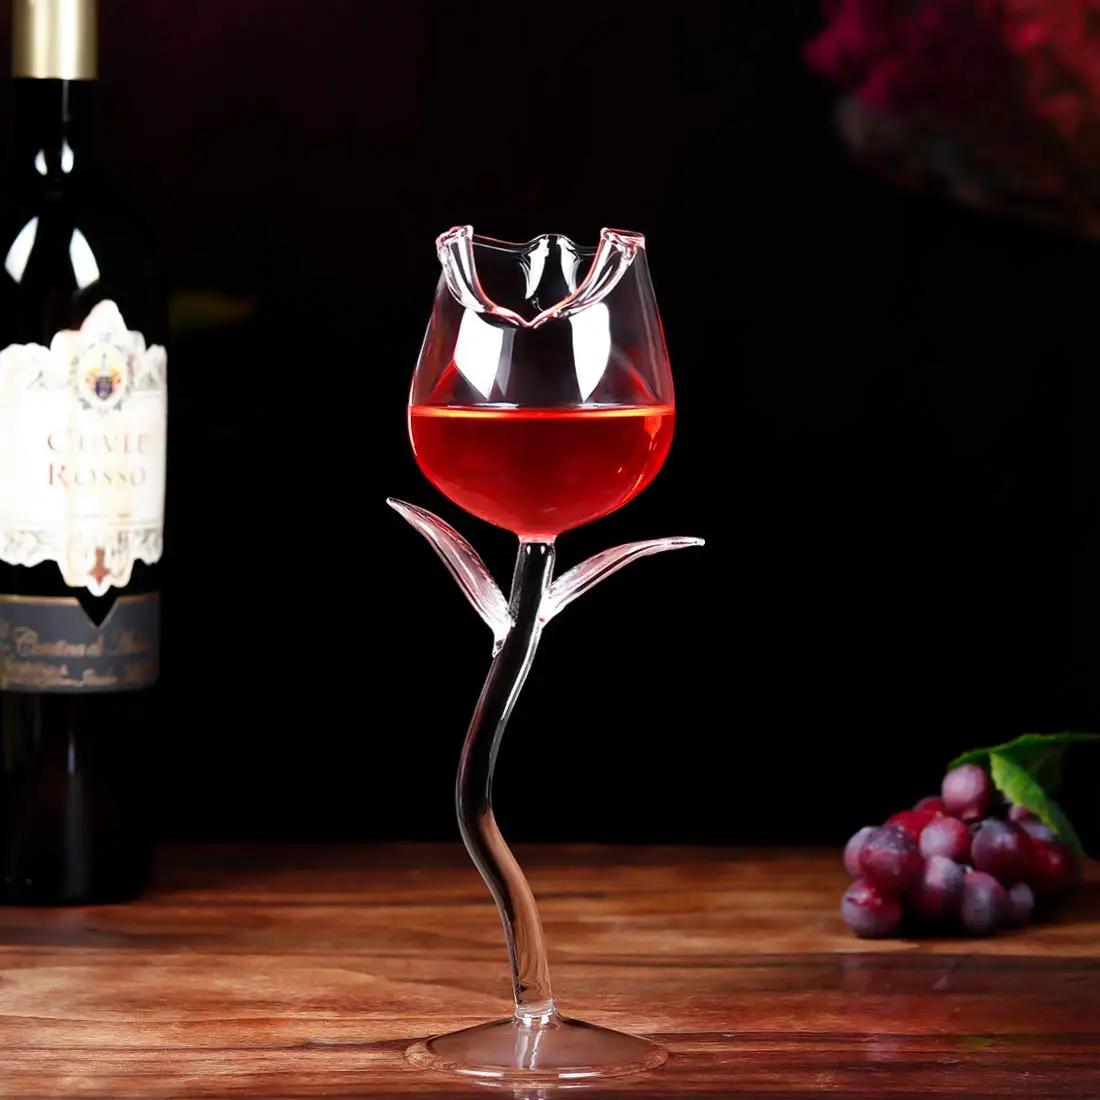 homeacc creative rose wine glass, 2 glasses